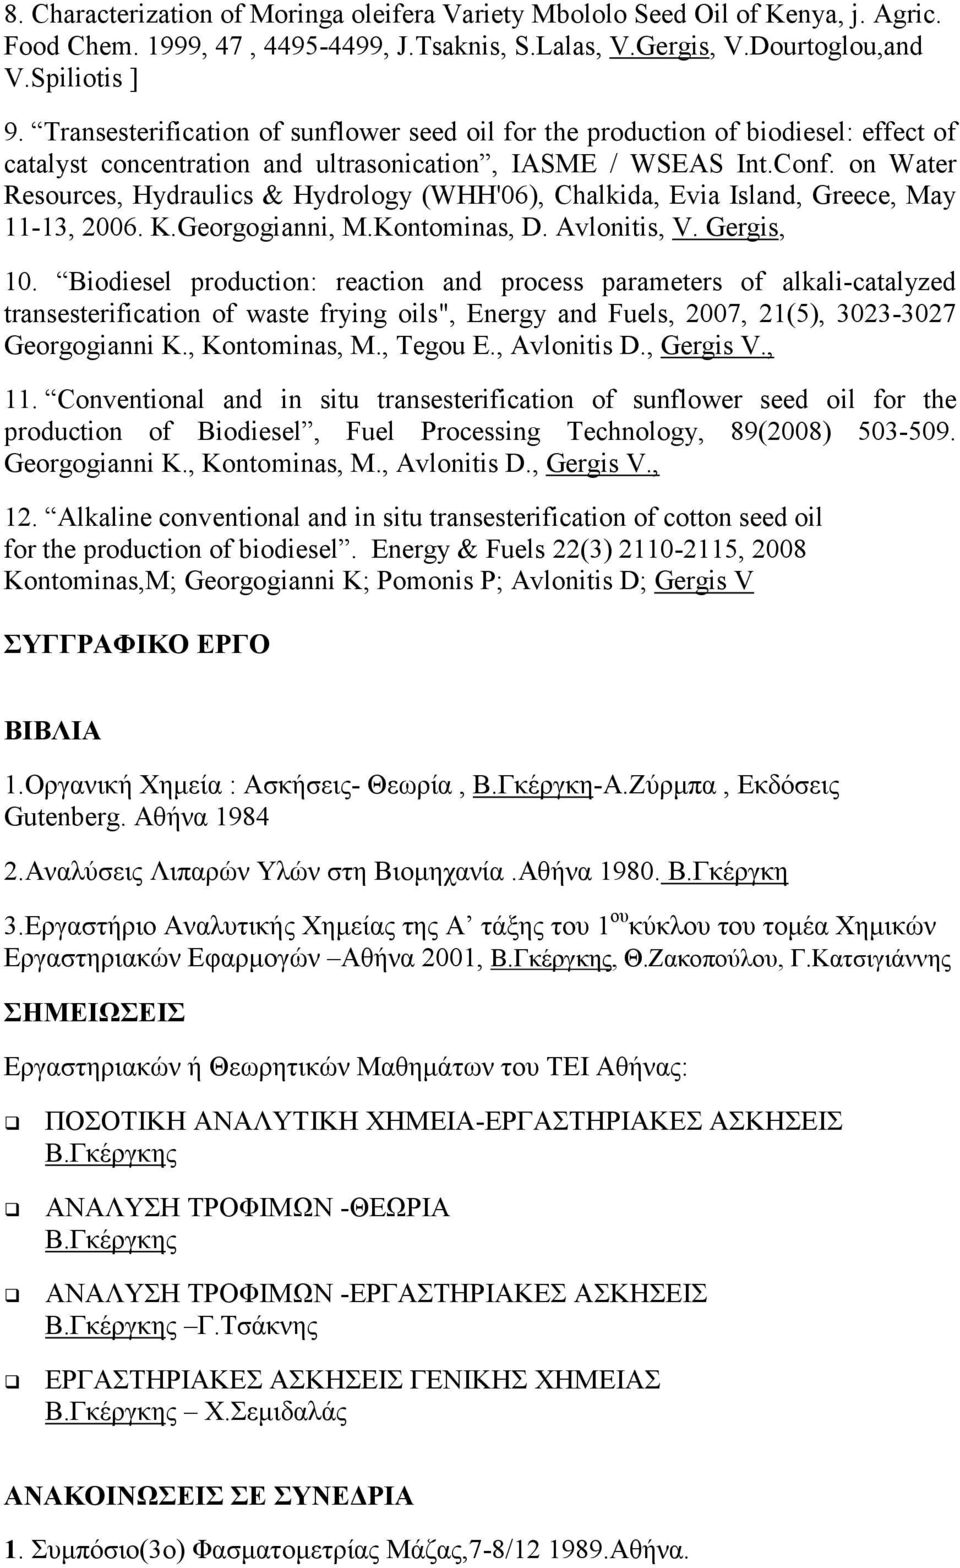 on Water Resources, Hydraulics & Hydrology (WHH'06), Chalkida, Evia Island, Greece, May 11-13, 2006. K.Georgogianni, M.Kontominas, D. Avlonitis, V. Gergis, 10.